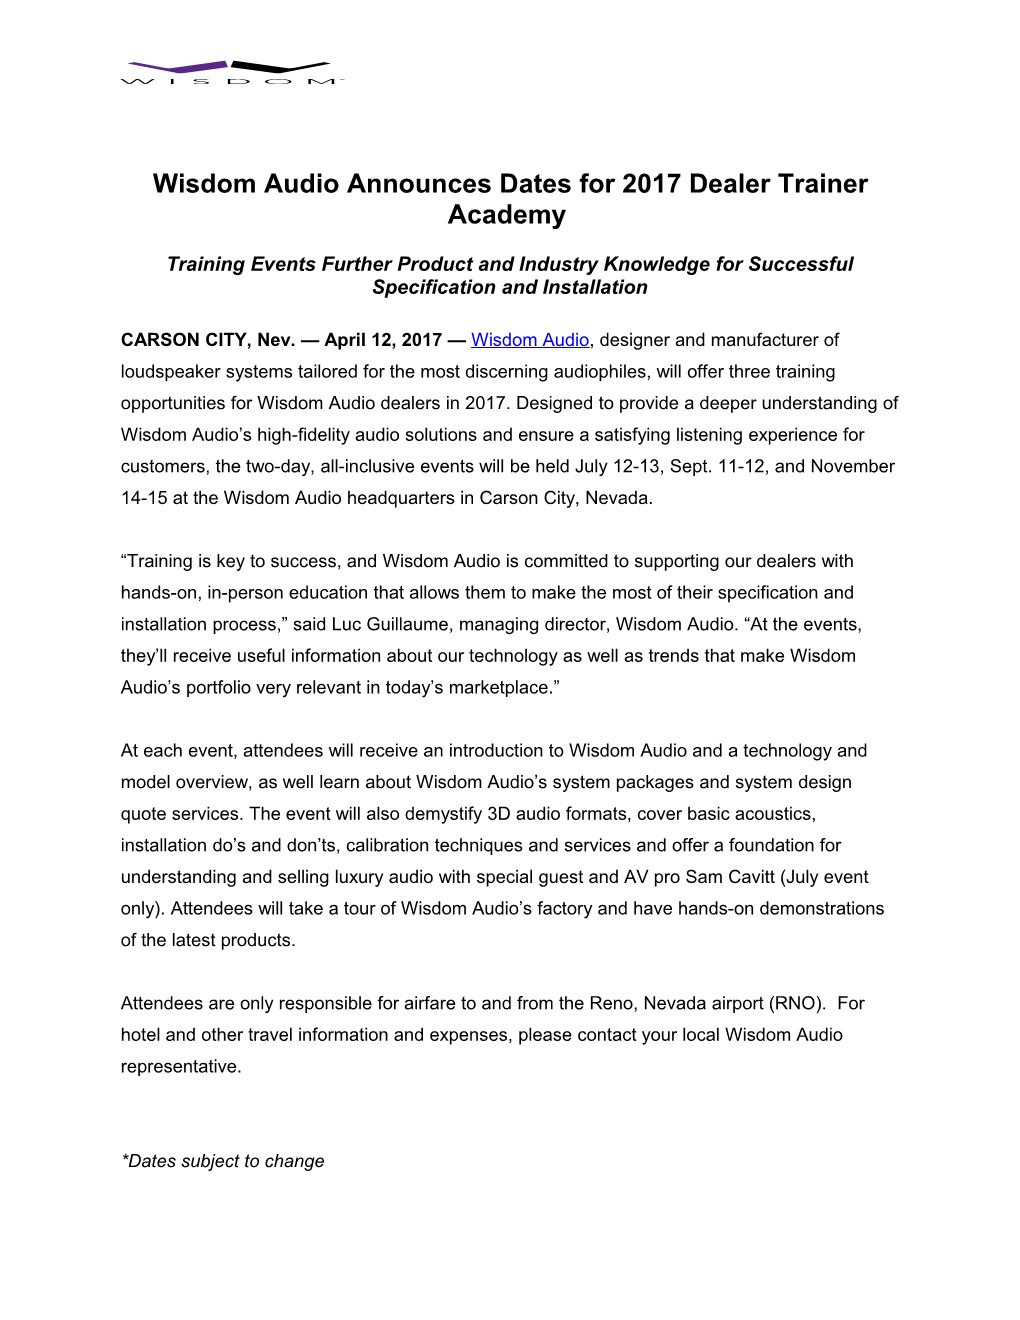 Wisdom Audio Announces Dates for 2017 Dealer Trainer Academy